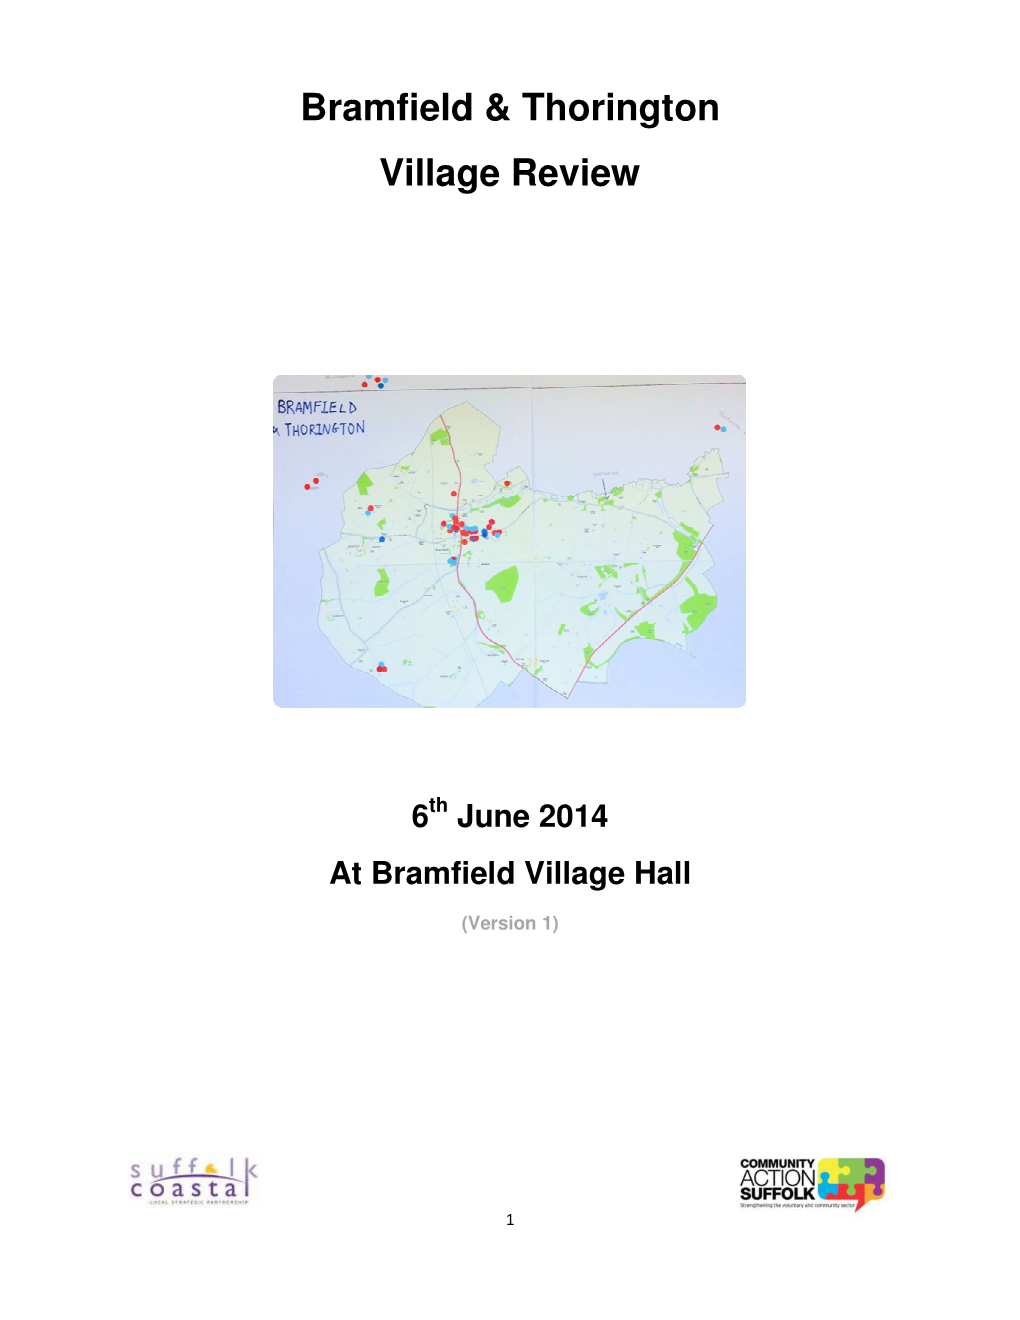 Bramfield & Thorington Village Review